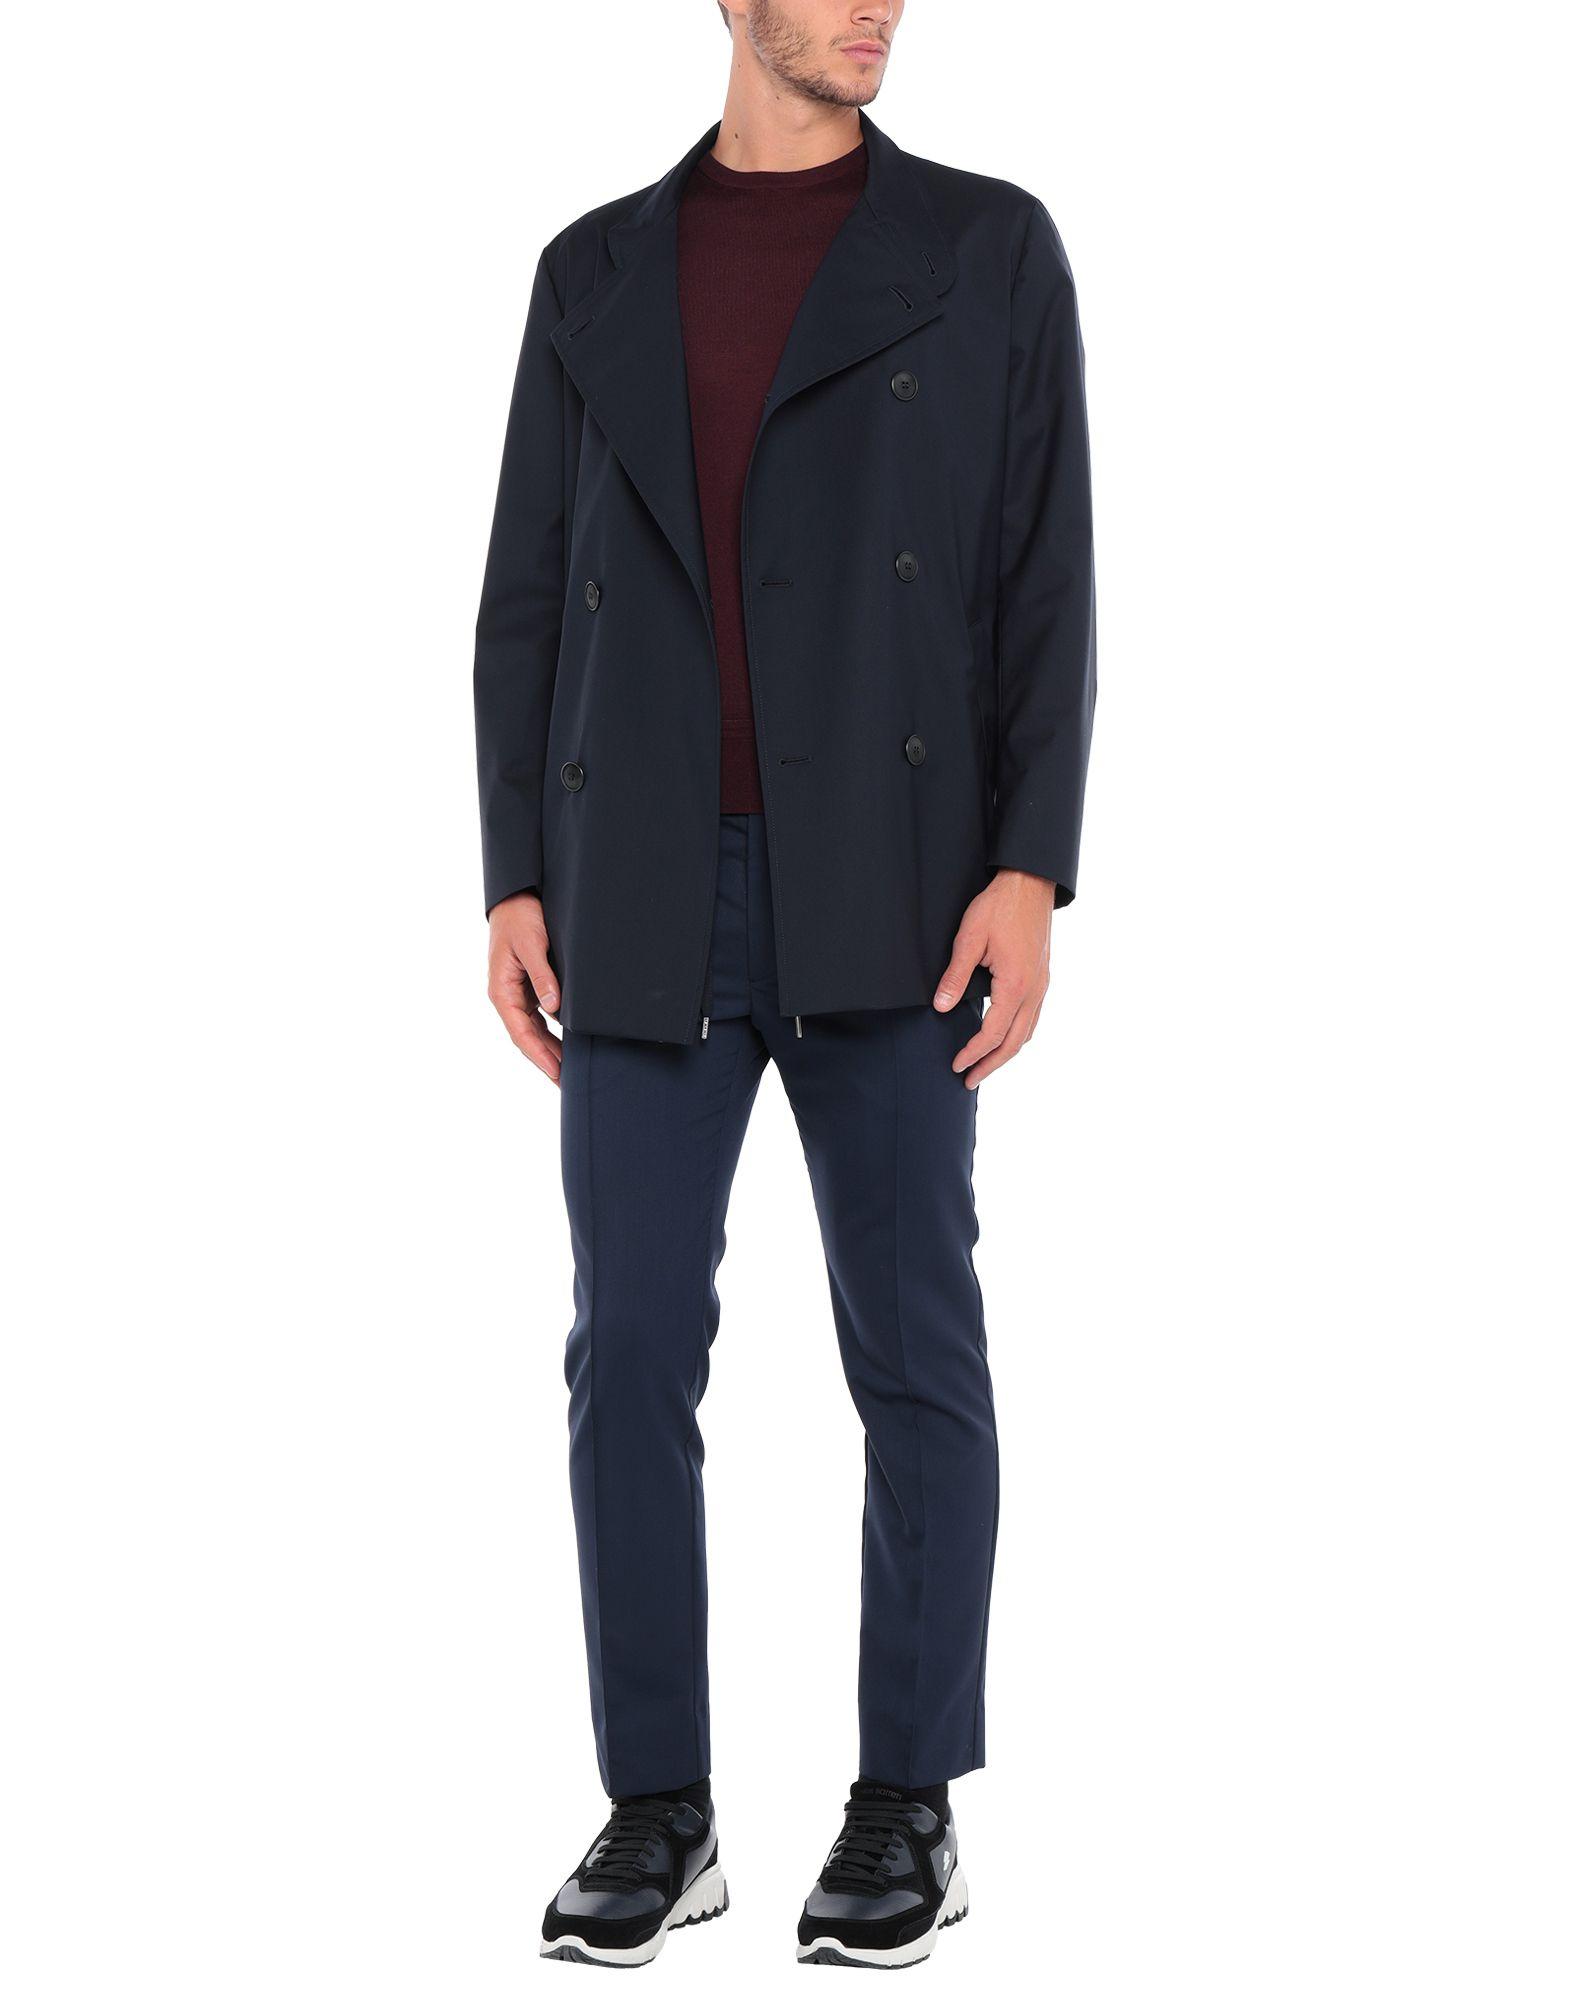 Giorgio Armani Wool Overcoat in Dark Blue (Blue) for Men - Lyst